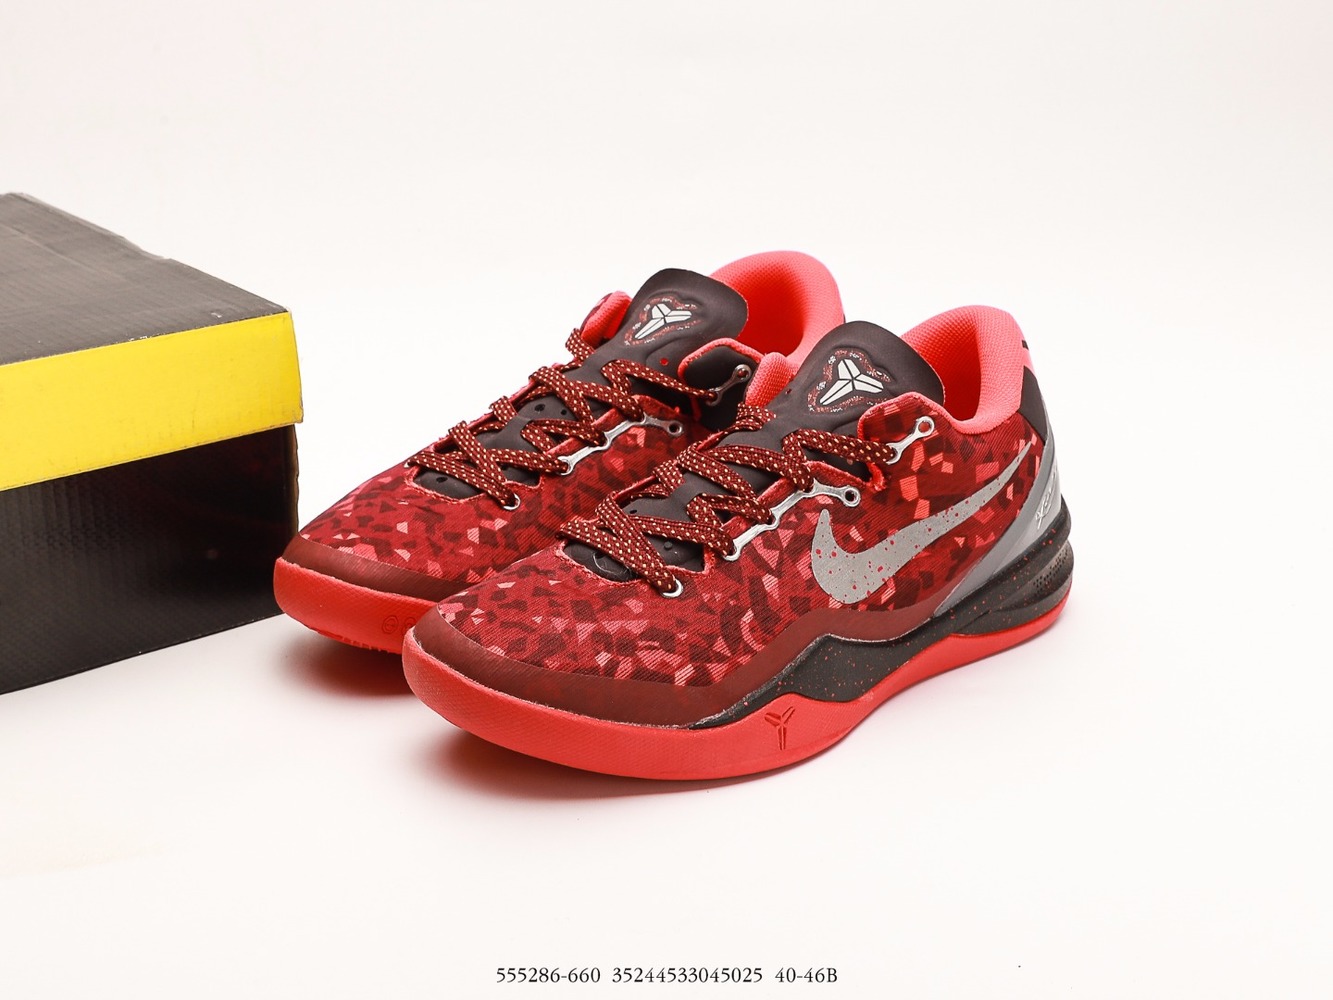 Nike Kobe 8 Year of the Snake_555286-660